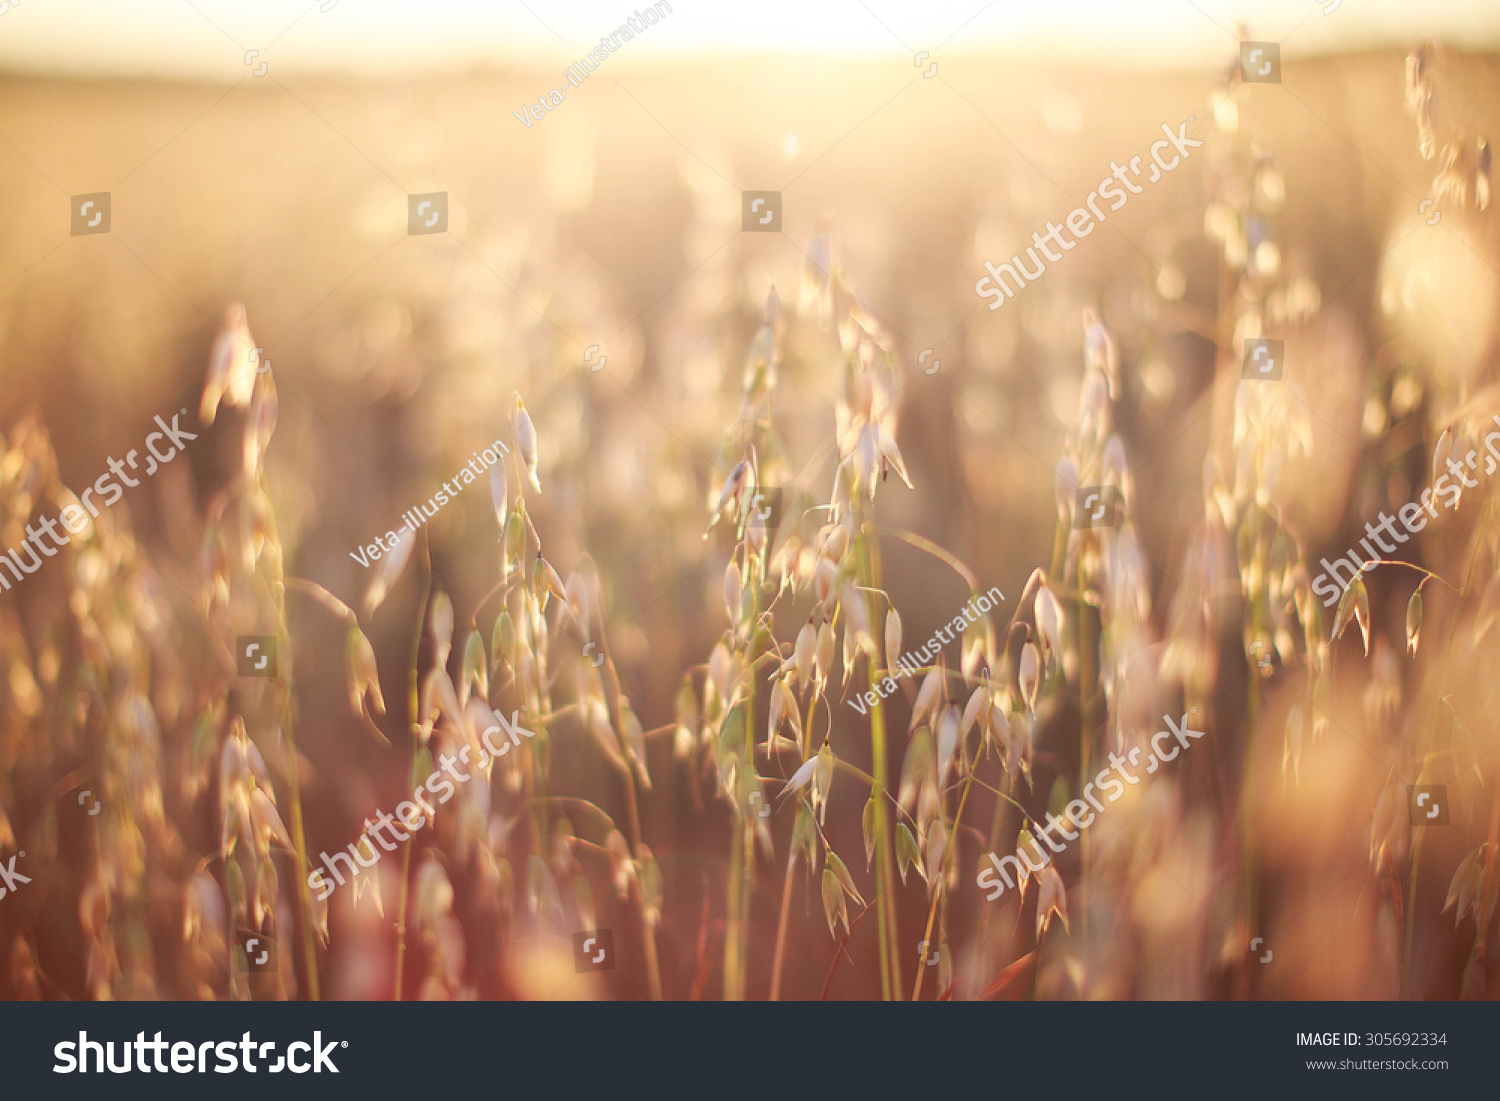 oats at sunset texture #305692334